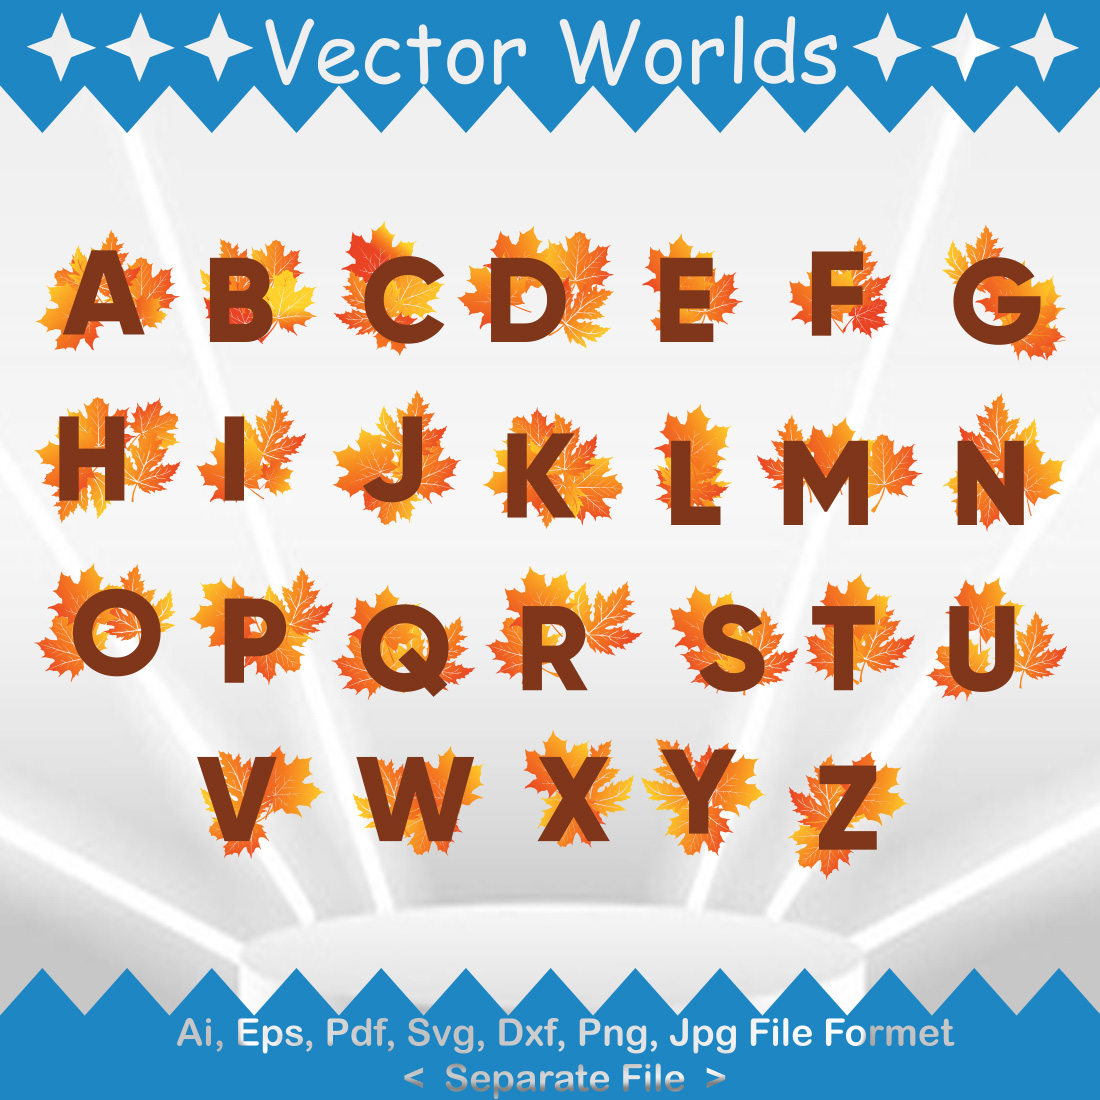 Autumn Alphabets SVG Vector Design cover image.